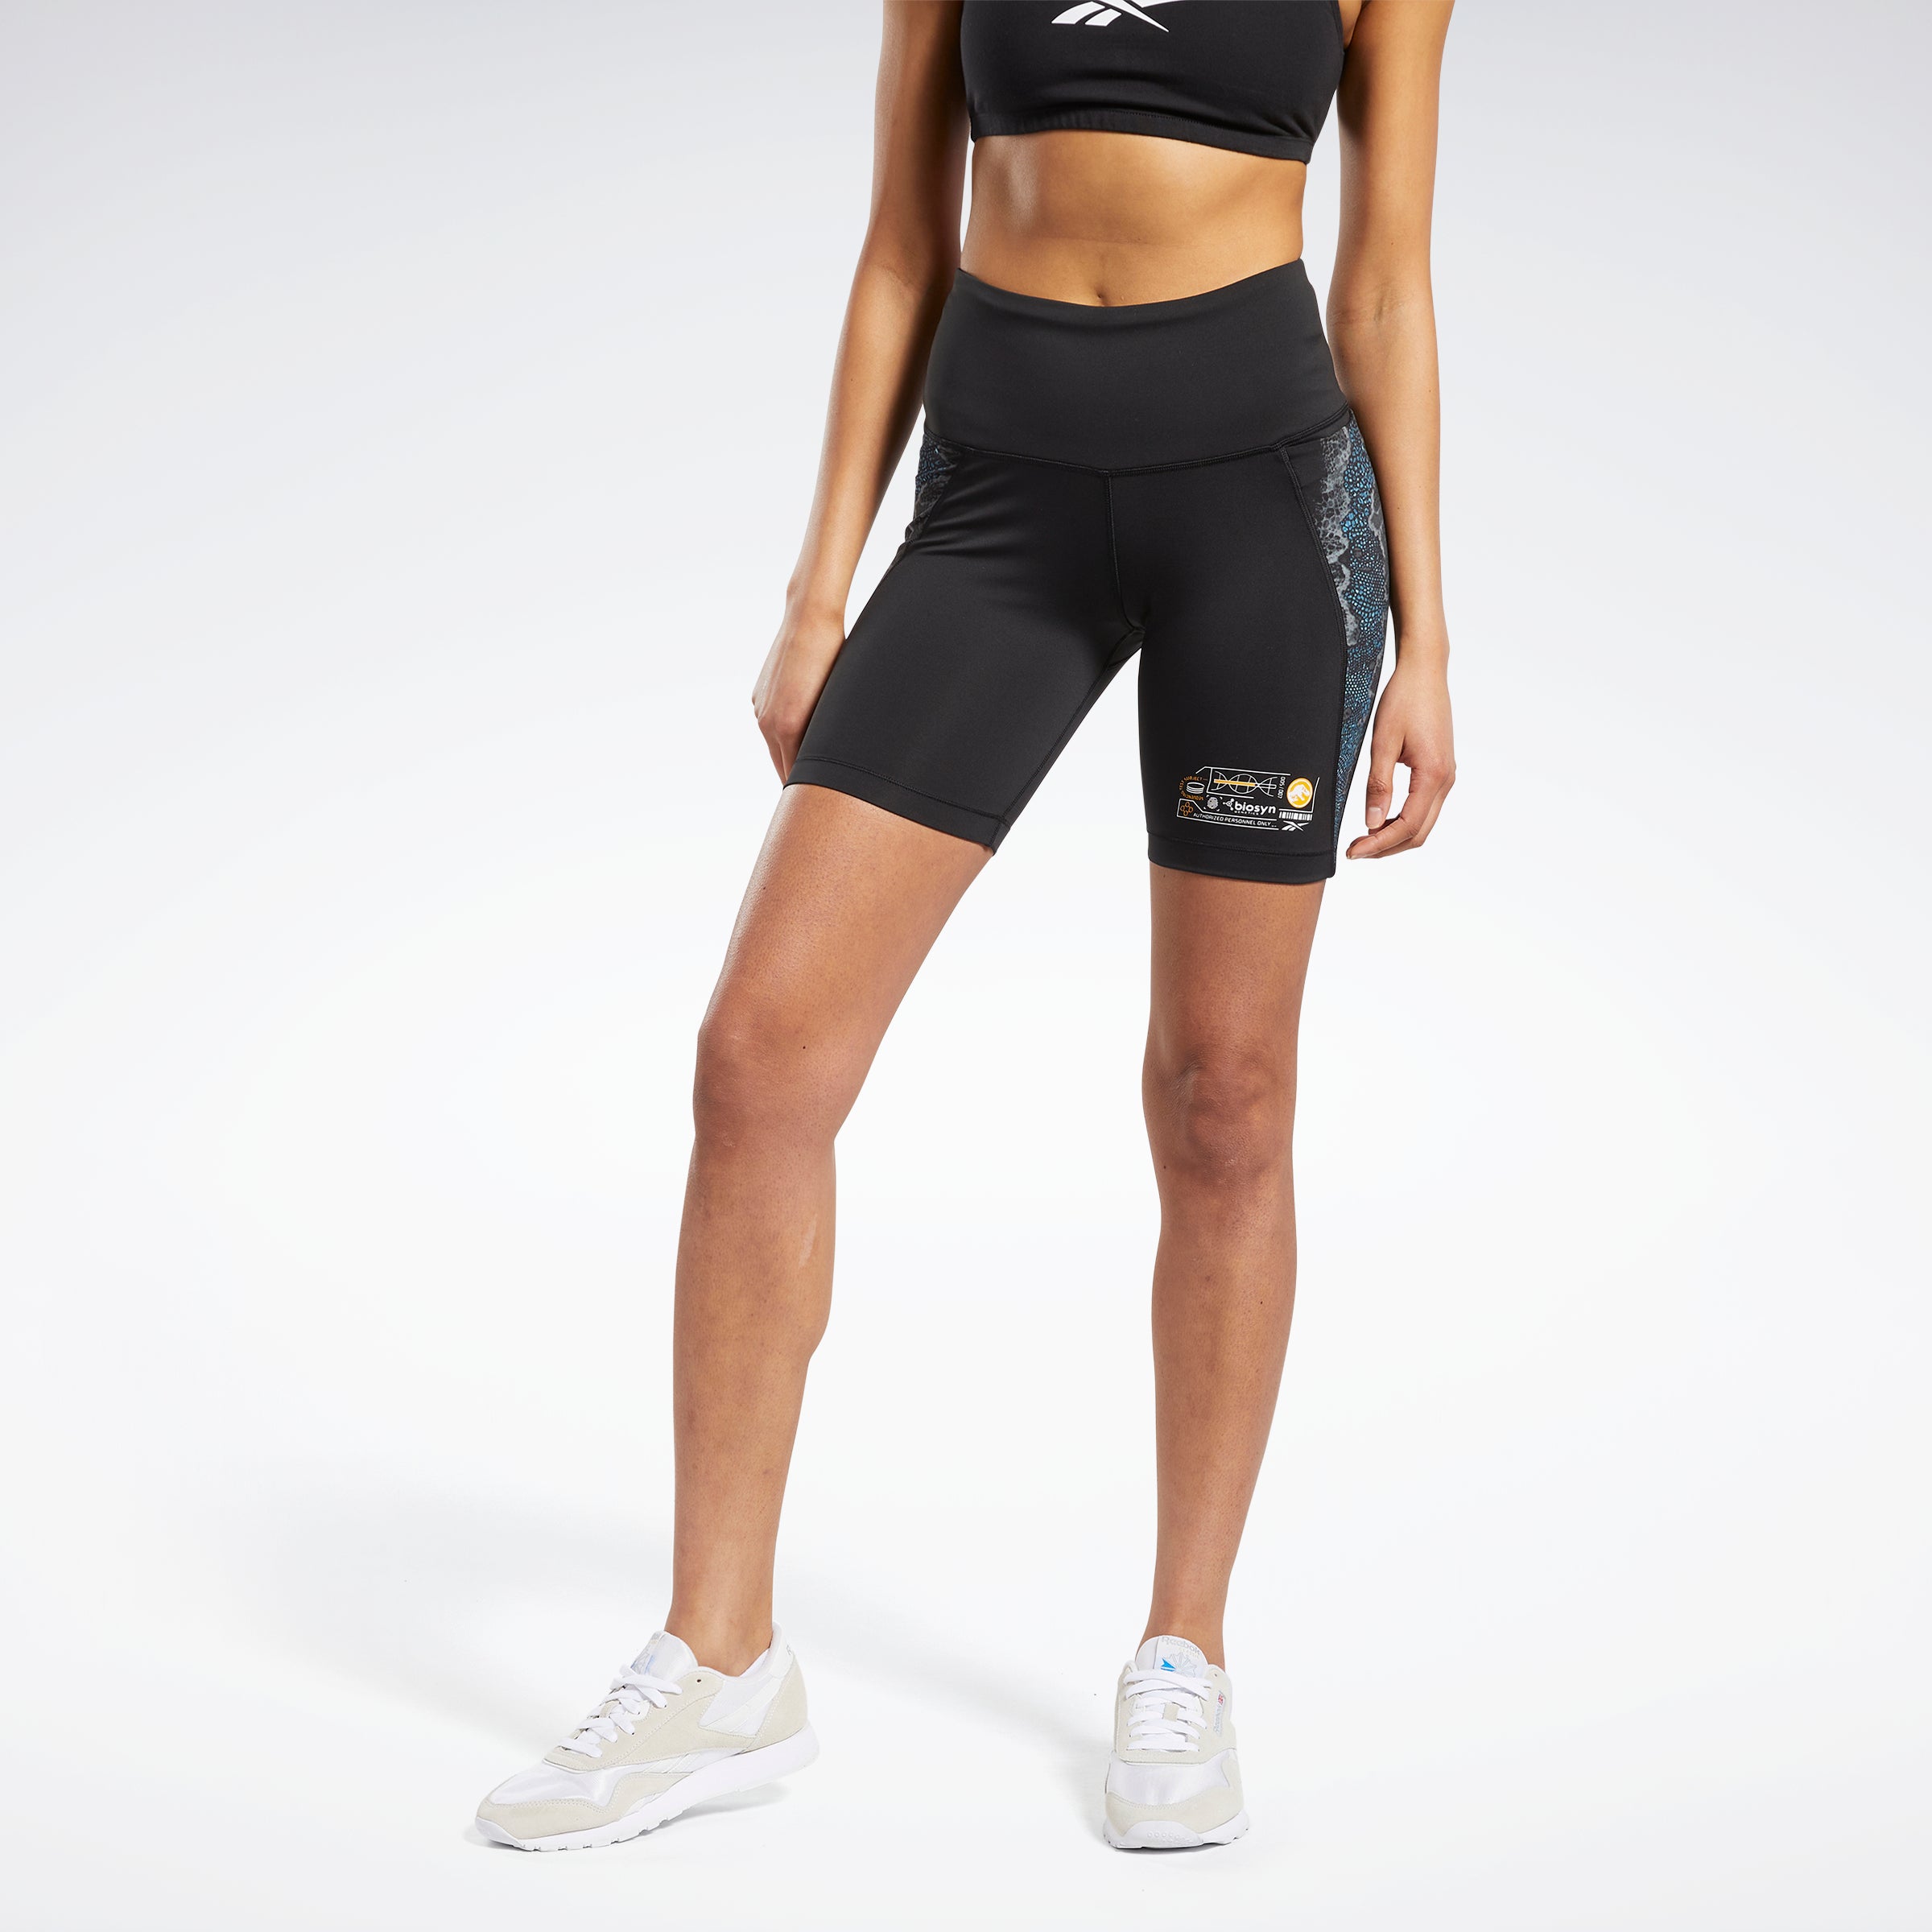 Aspiring Women's Bike Shorts - VMG Clothing